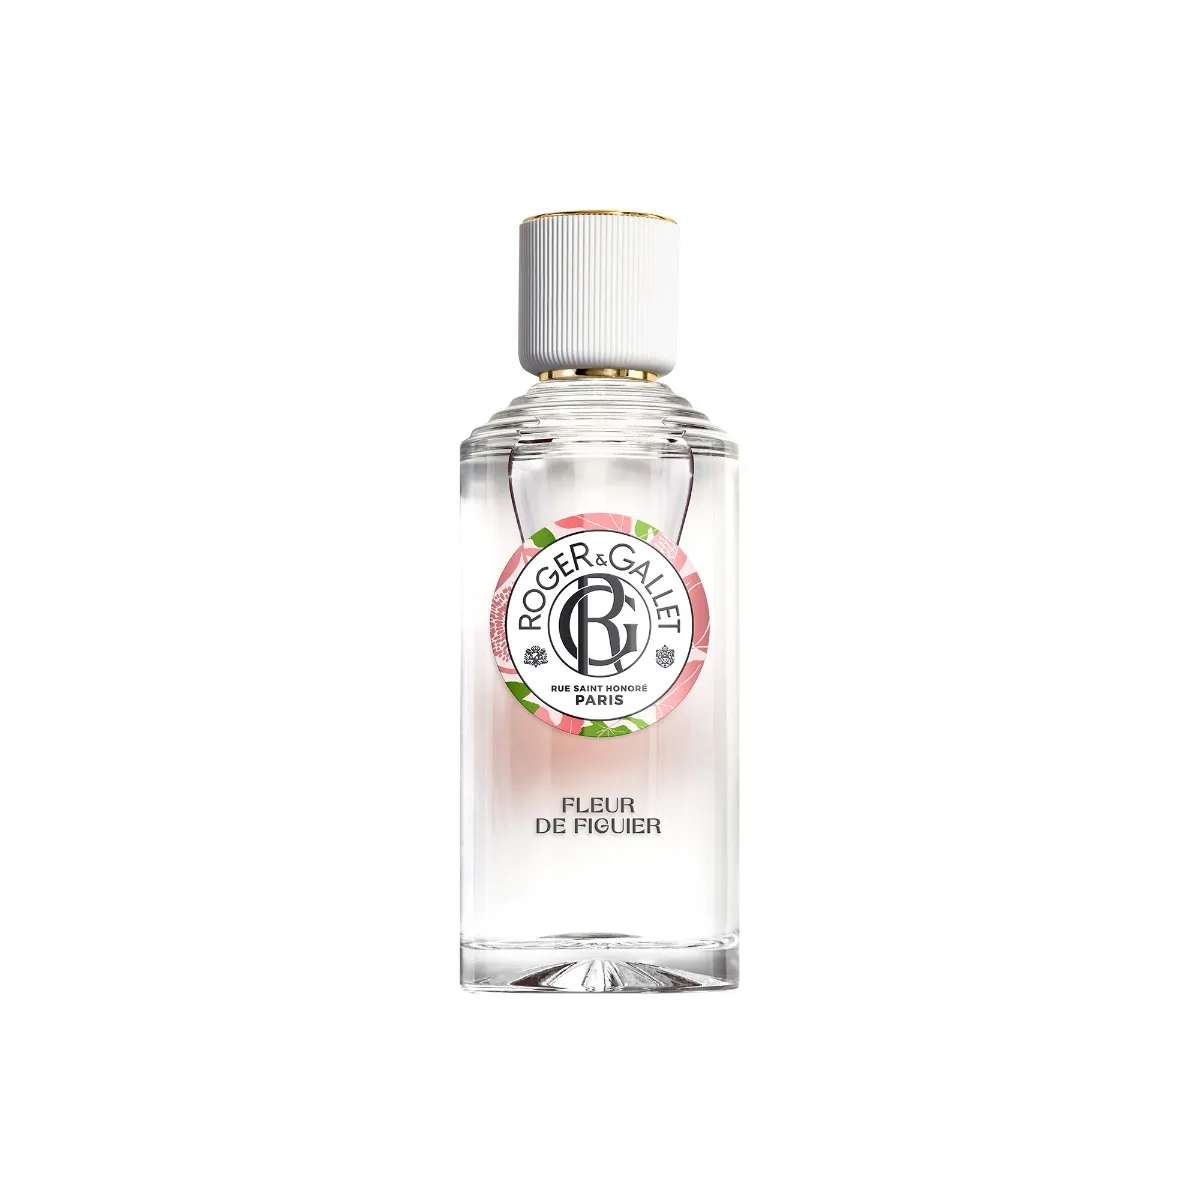 R&G Fleur de Figuier Eau Parfumée 100 ml Fragranza di benessere